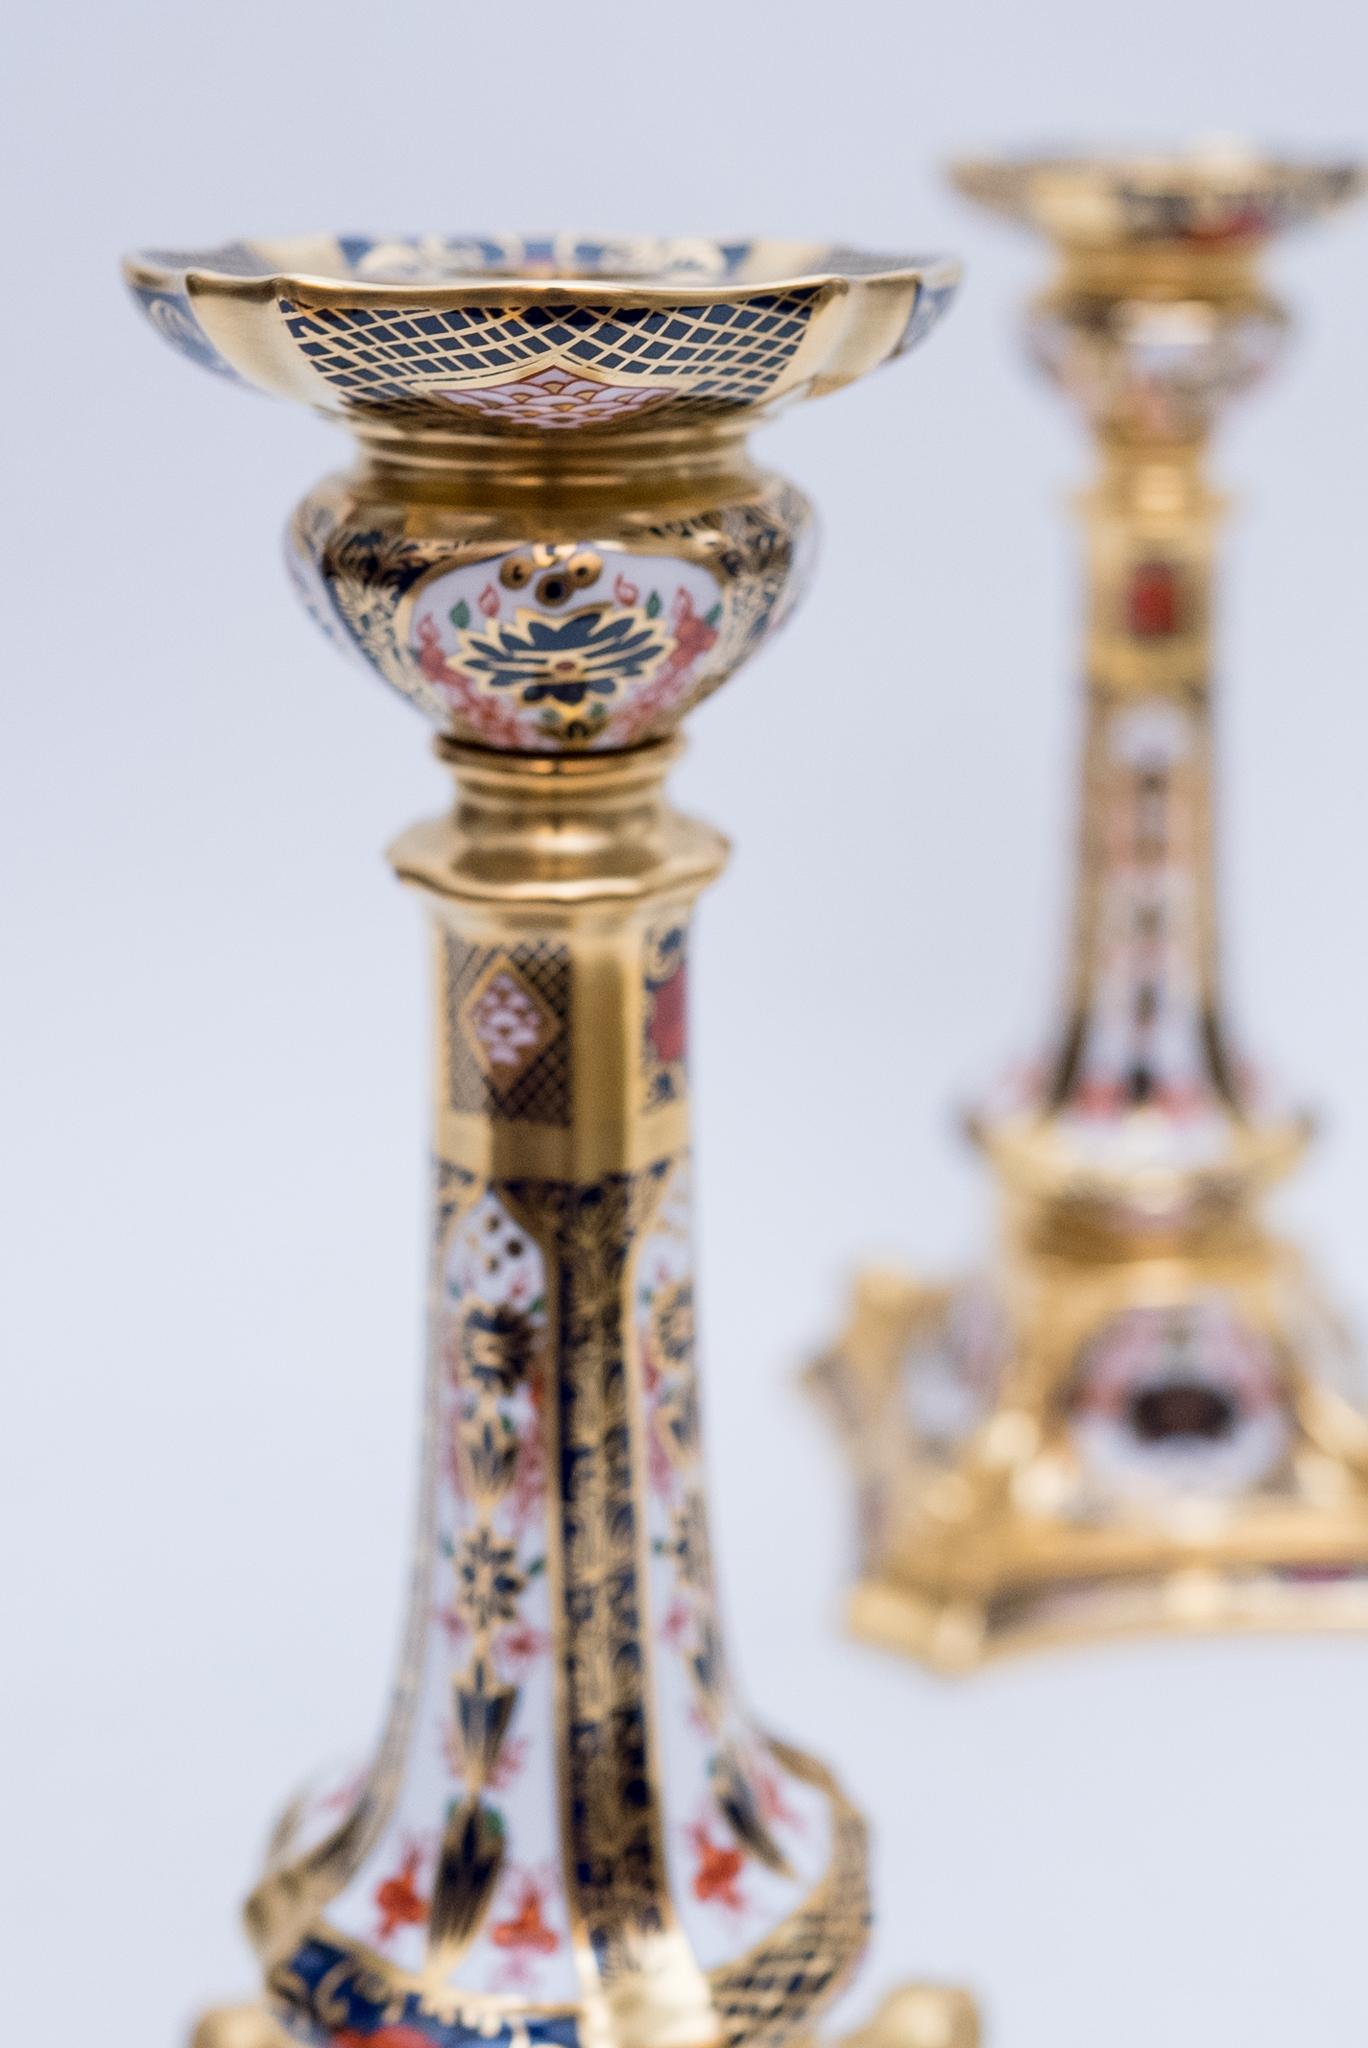 royal crown derby candlesticks